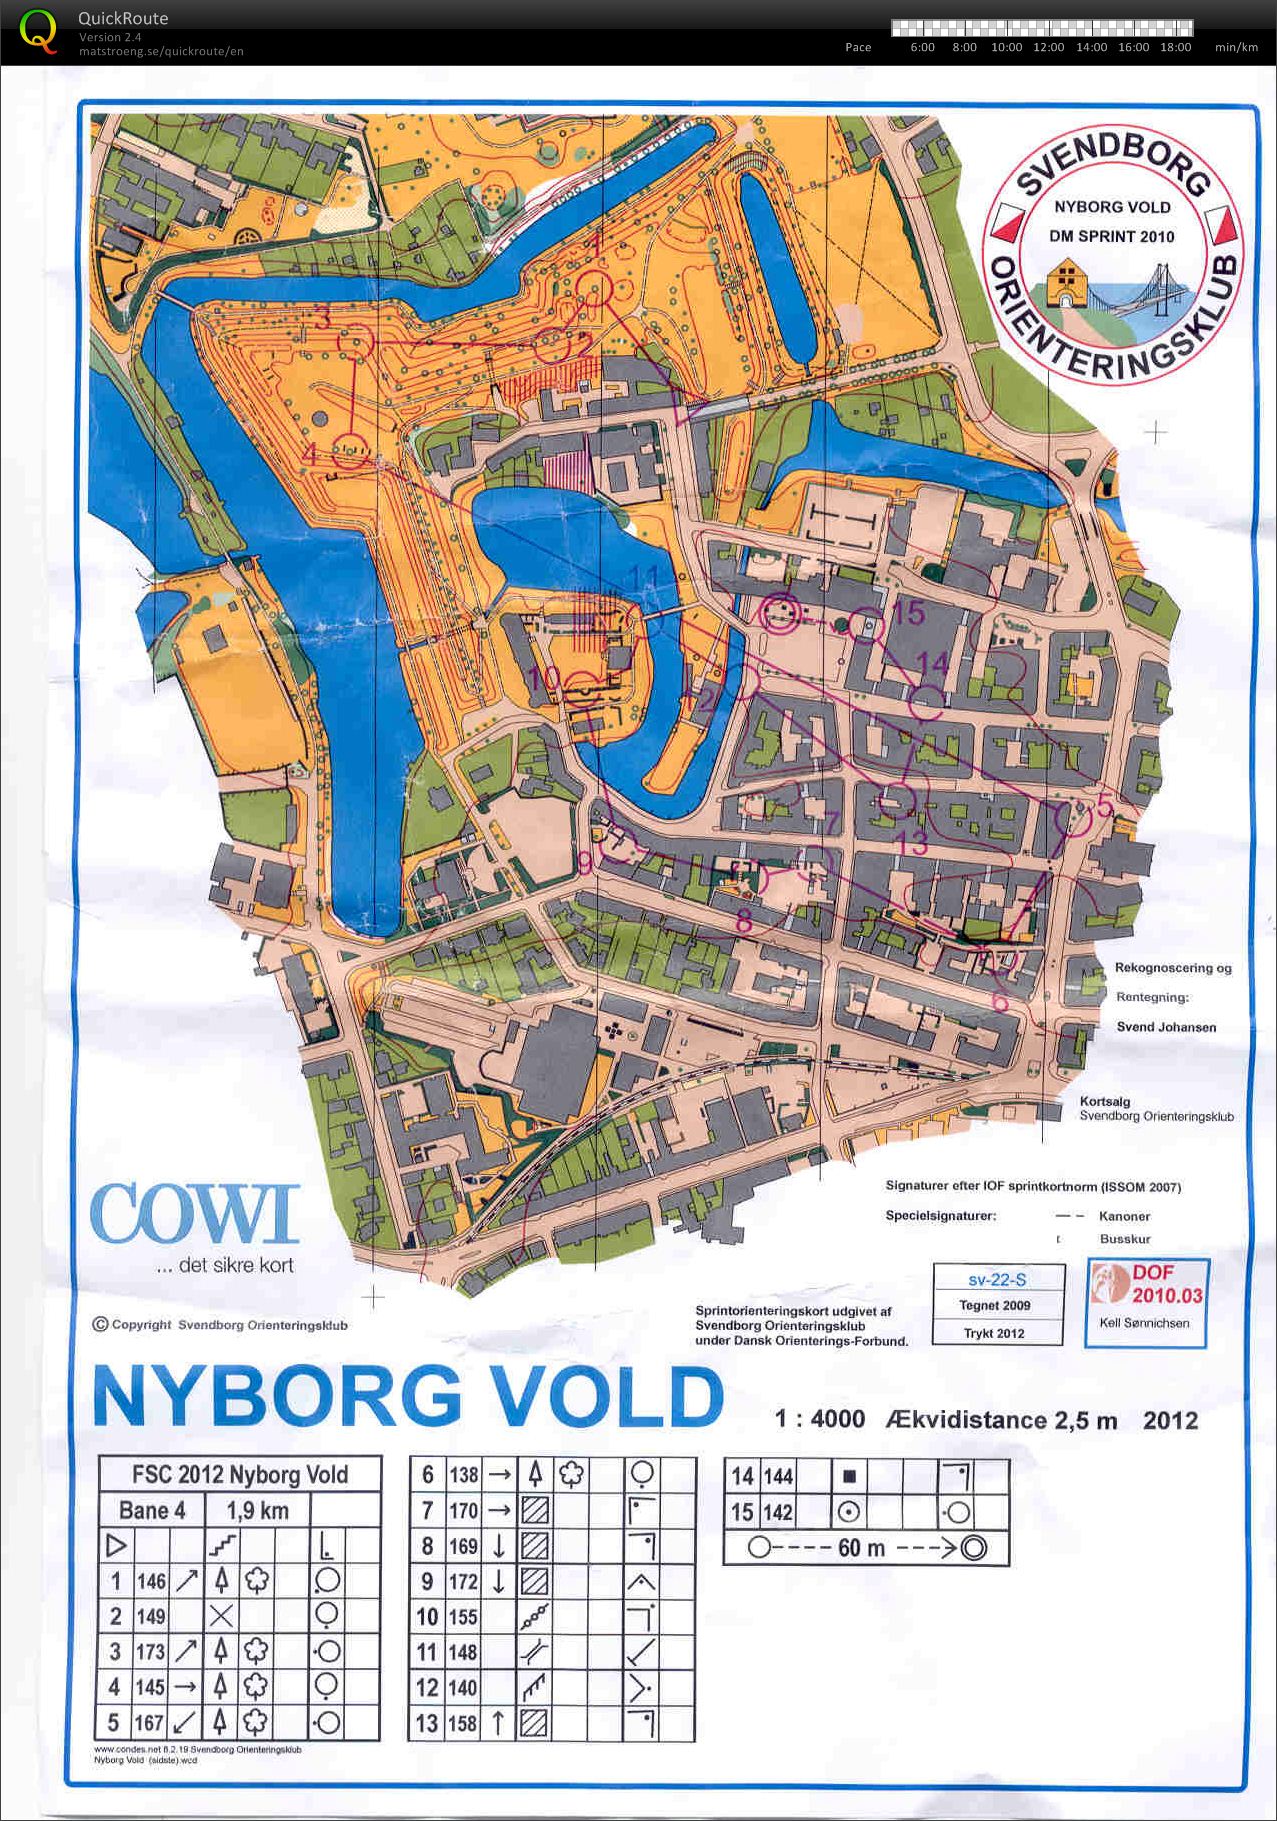 Nyborg Vold, Bane 4, D55, Pia Gade, 280512 (28/05/2012)